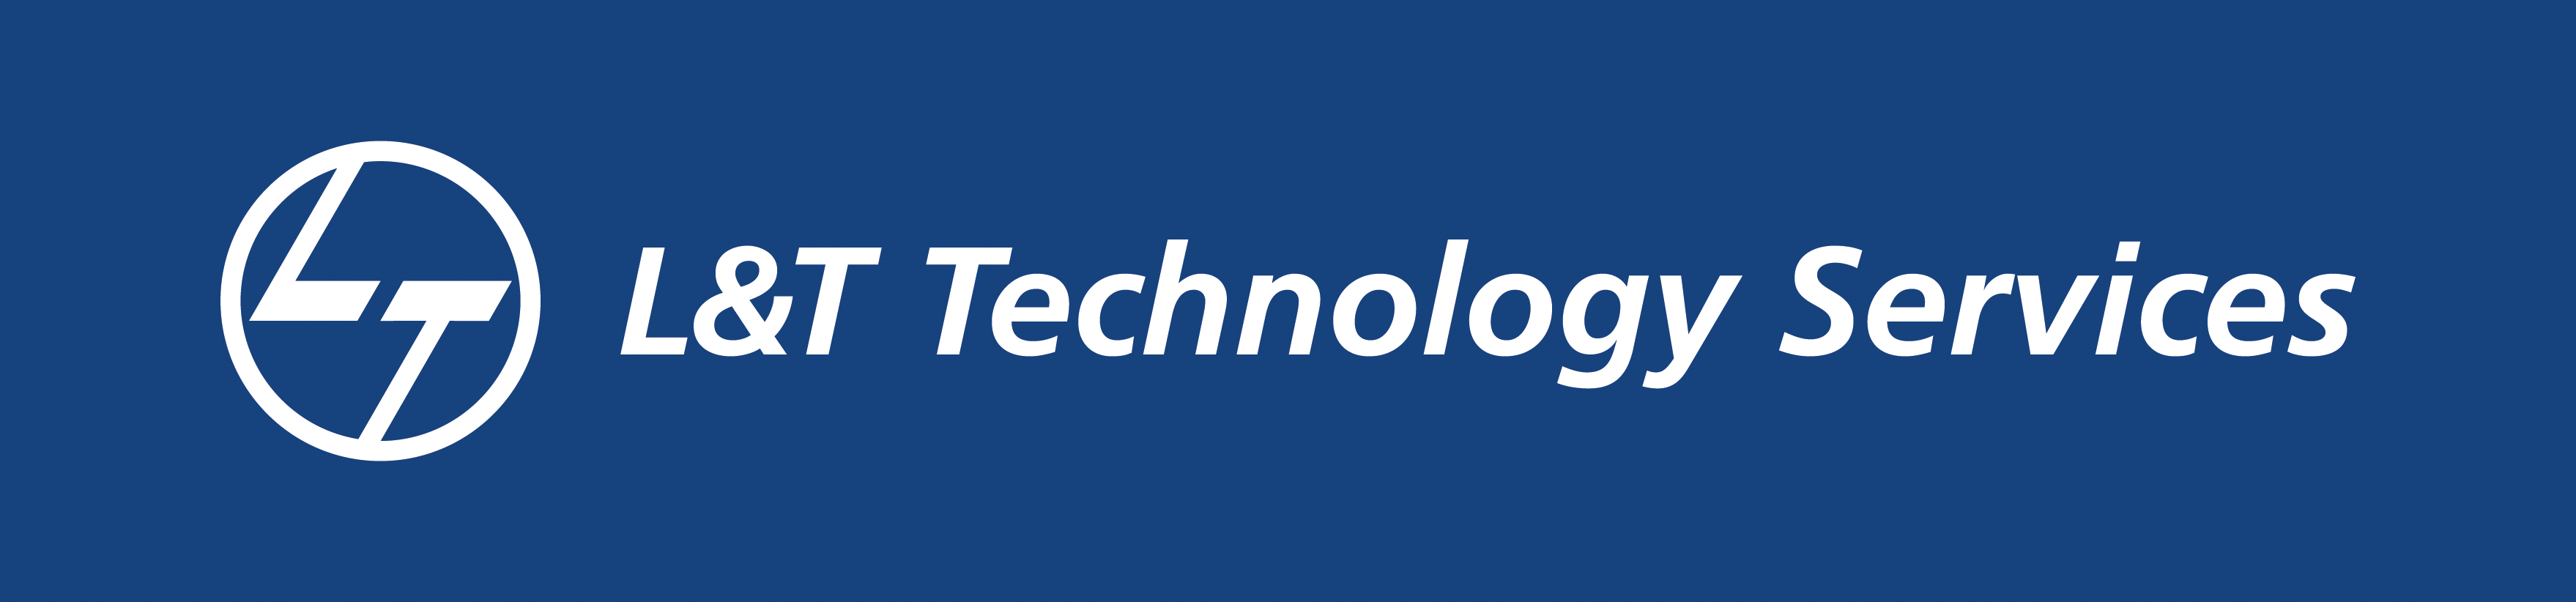 Media Kit | L&T Technology Services